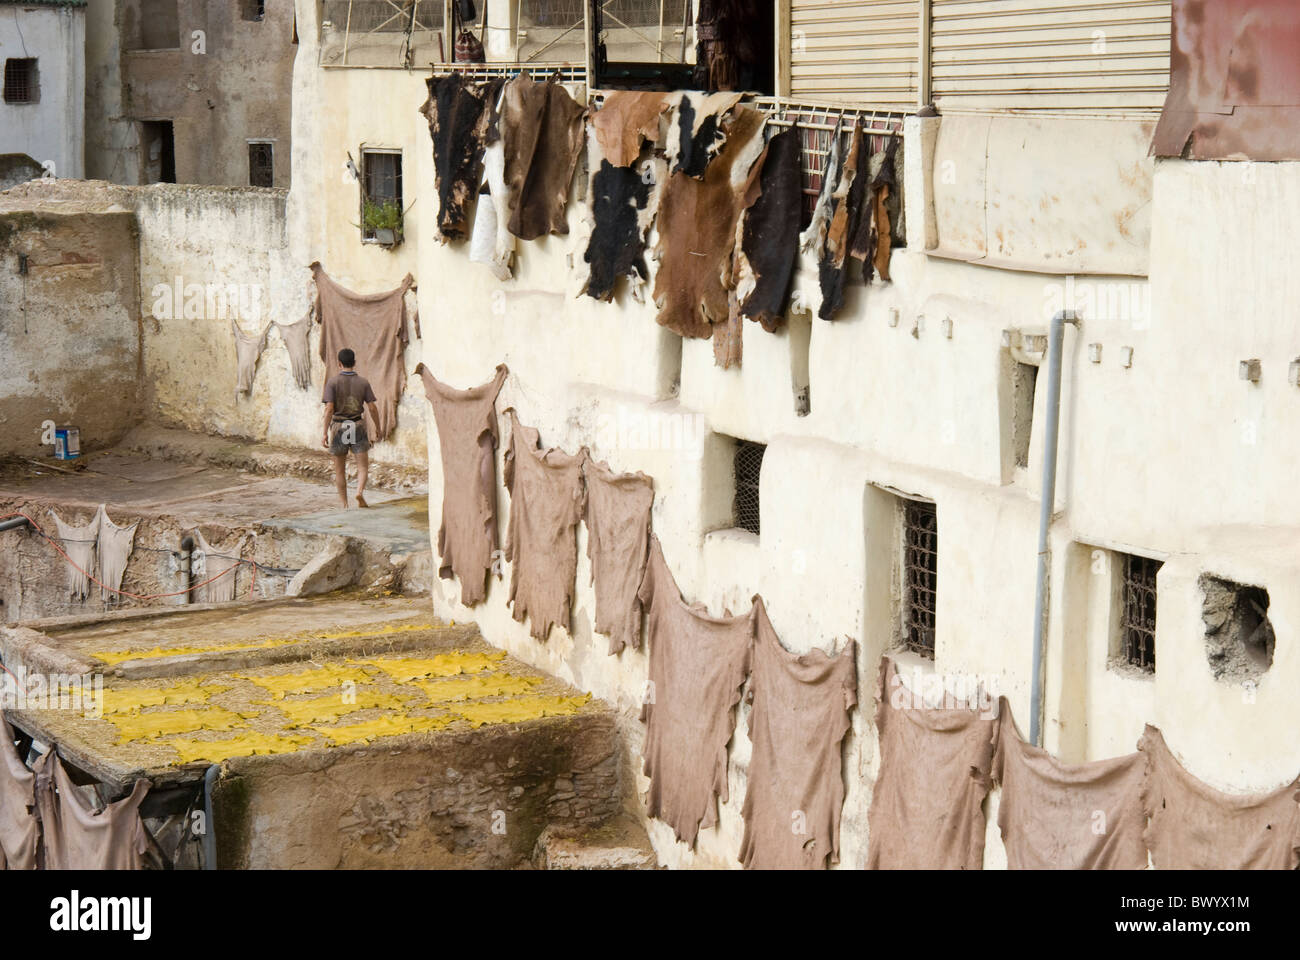 Chouwara tannery in Fez, Morocco Stock Photo